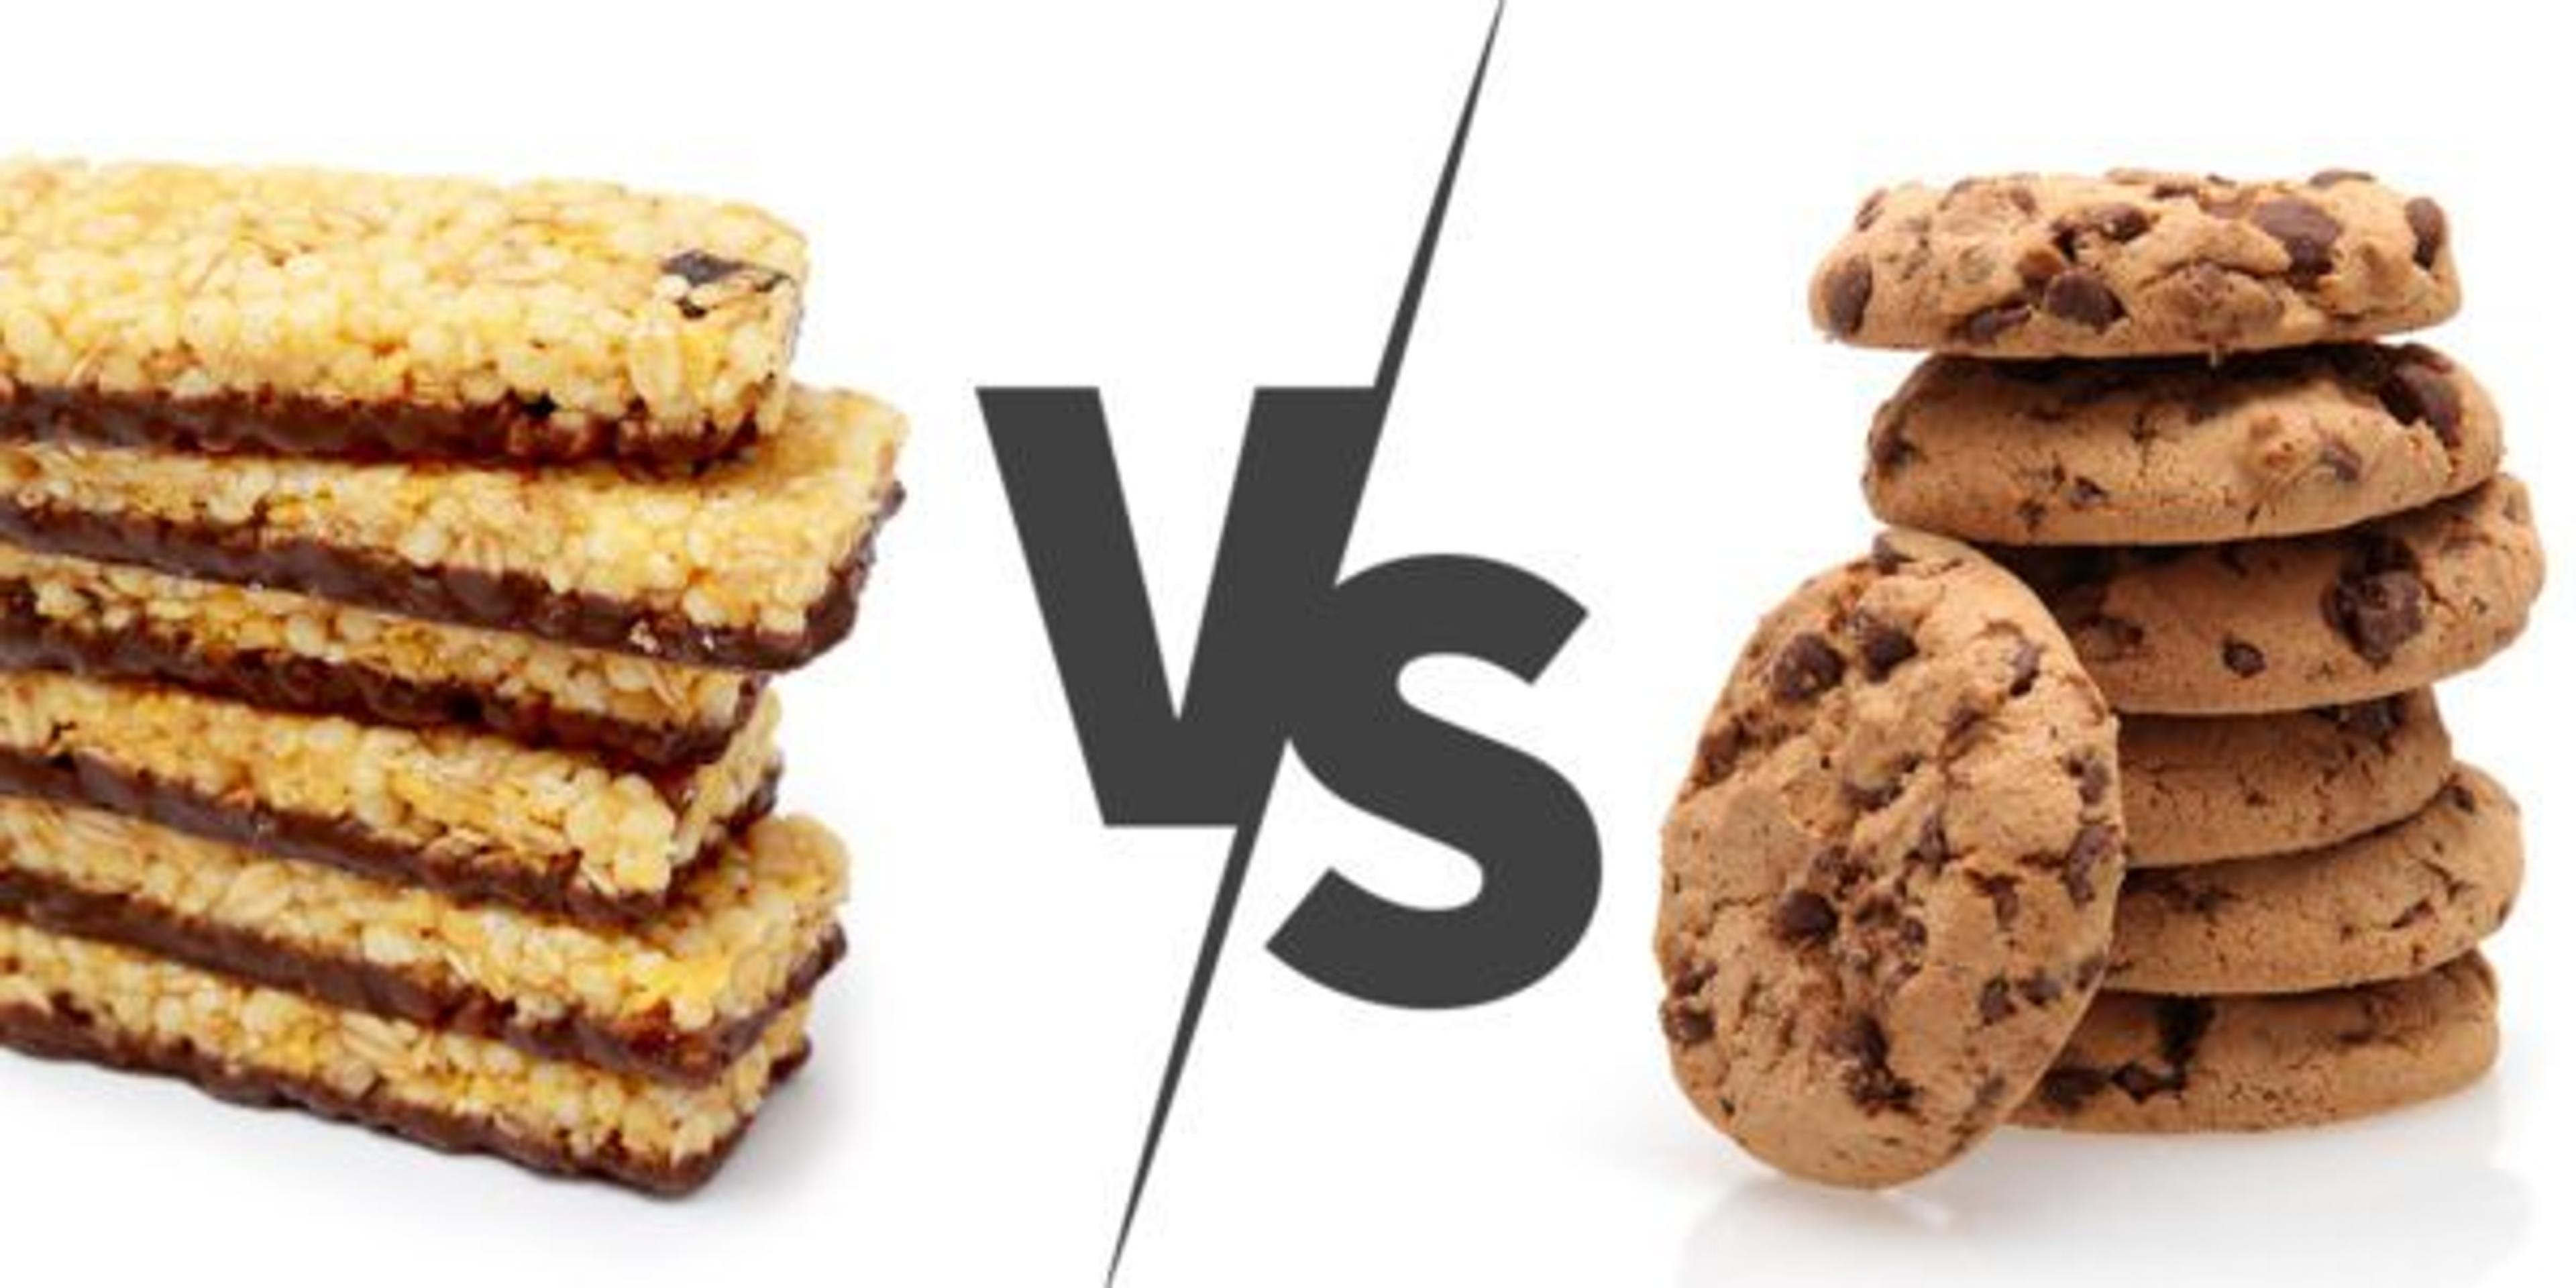 Cookies vs granola bars